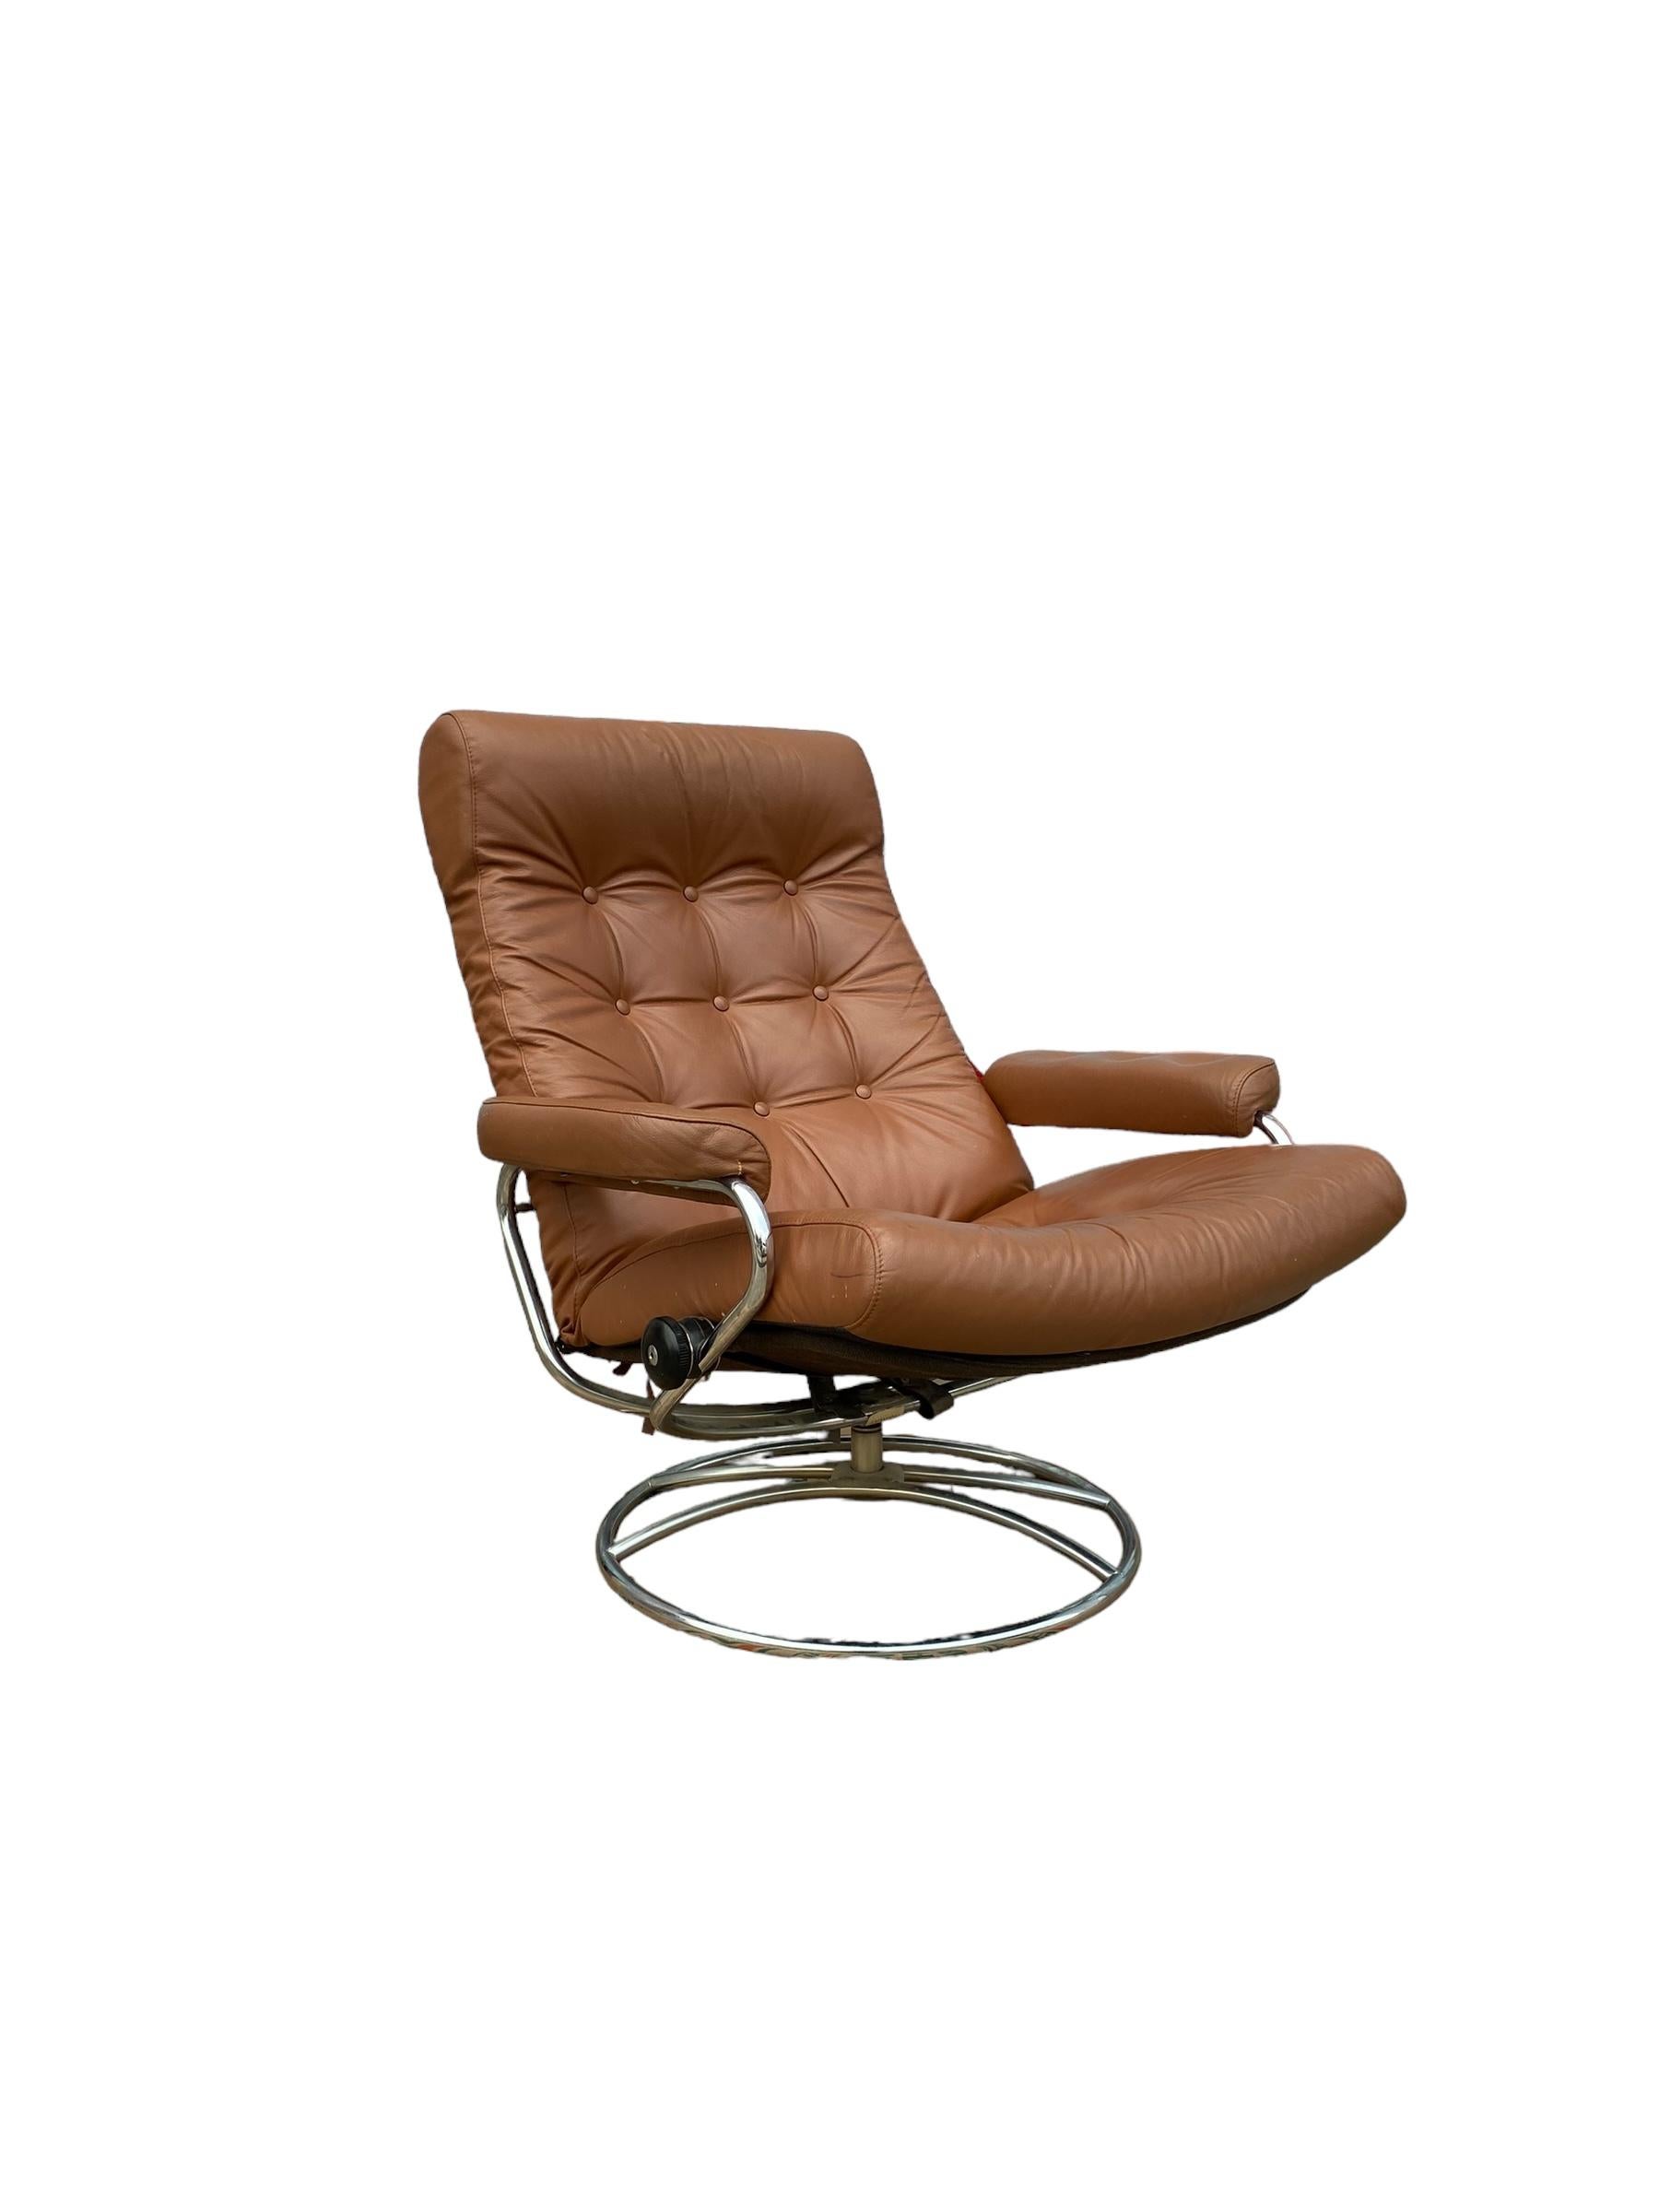 Scandinavian Modern Ekornes Stressless Reclining Lounge Chair and Ottoman in Burnt Orange